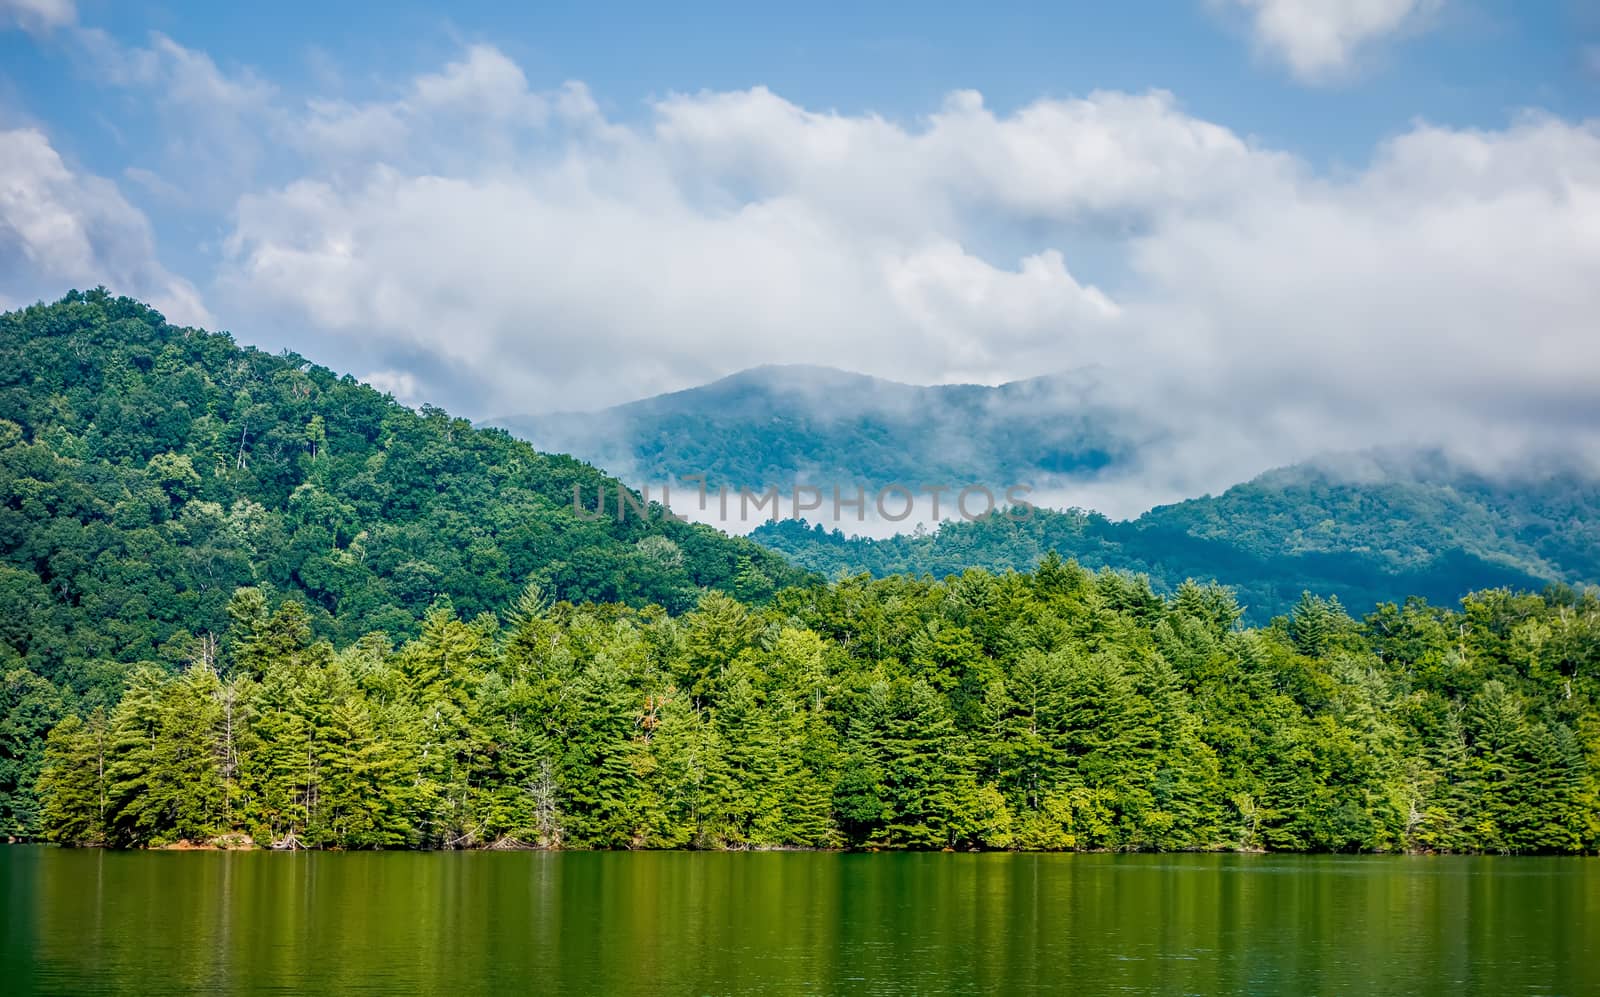 lake santeetlah scenery in great smoky mountains by digidreamgrafix